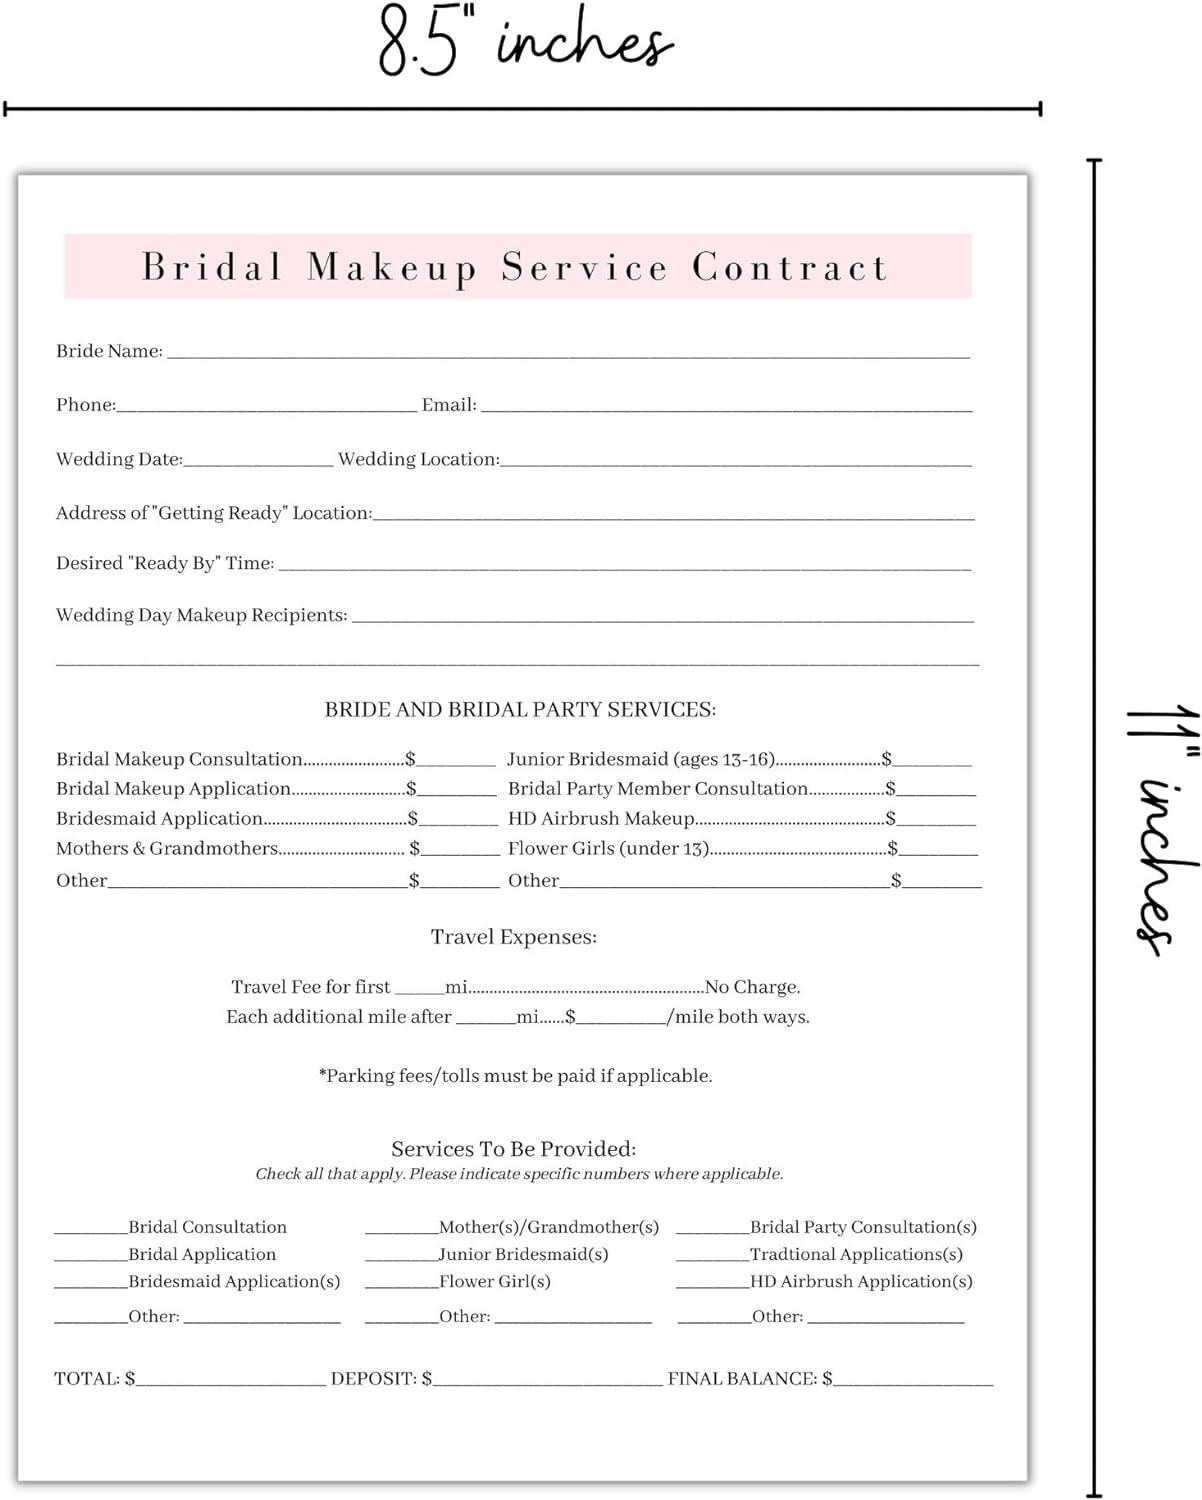 Bridal Makeup Service Contract 50